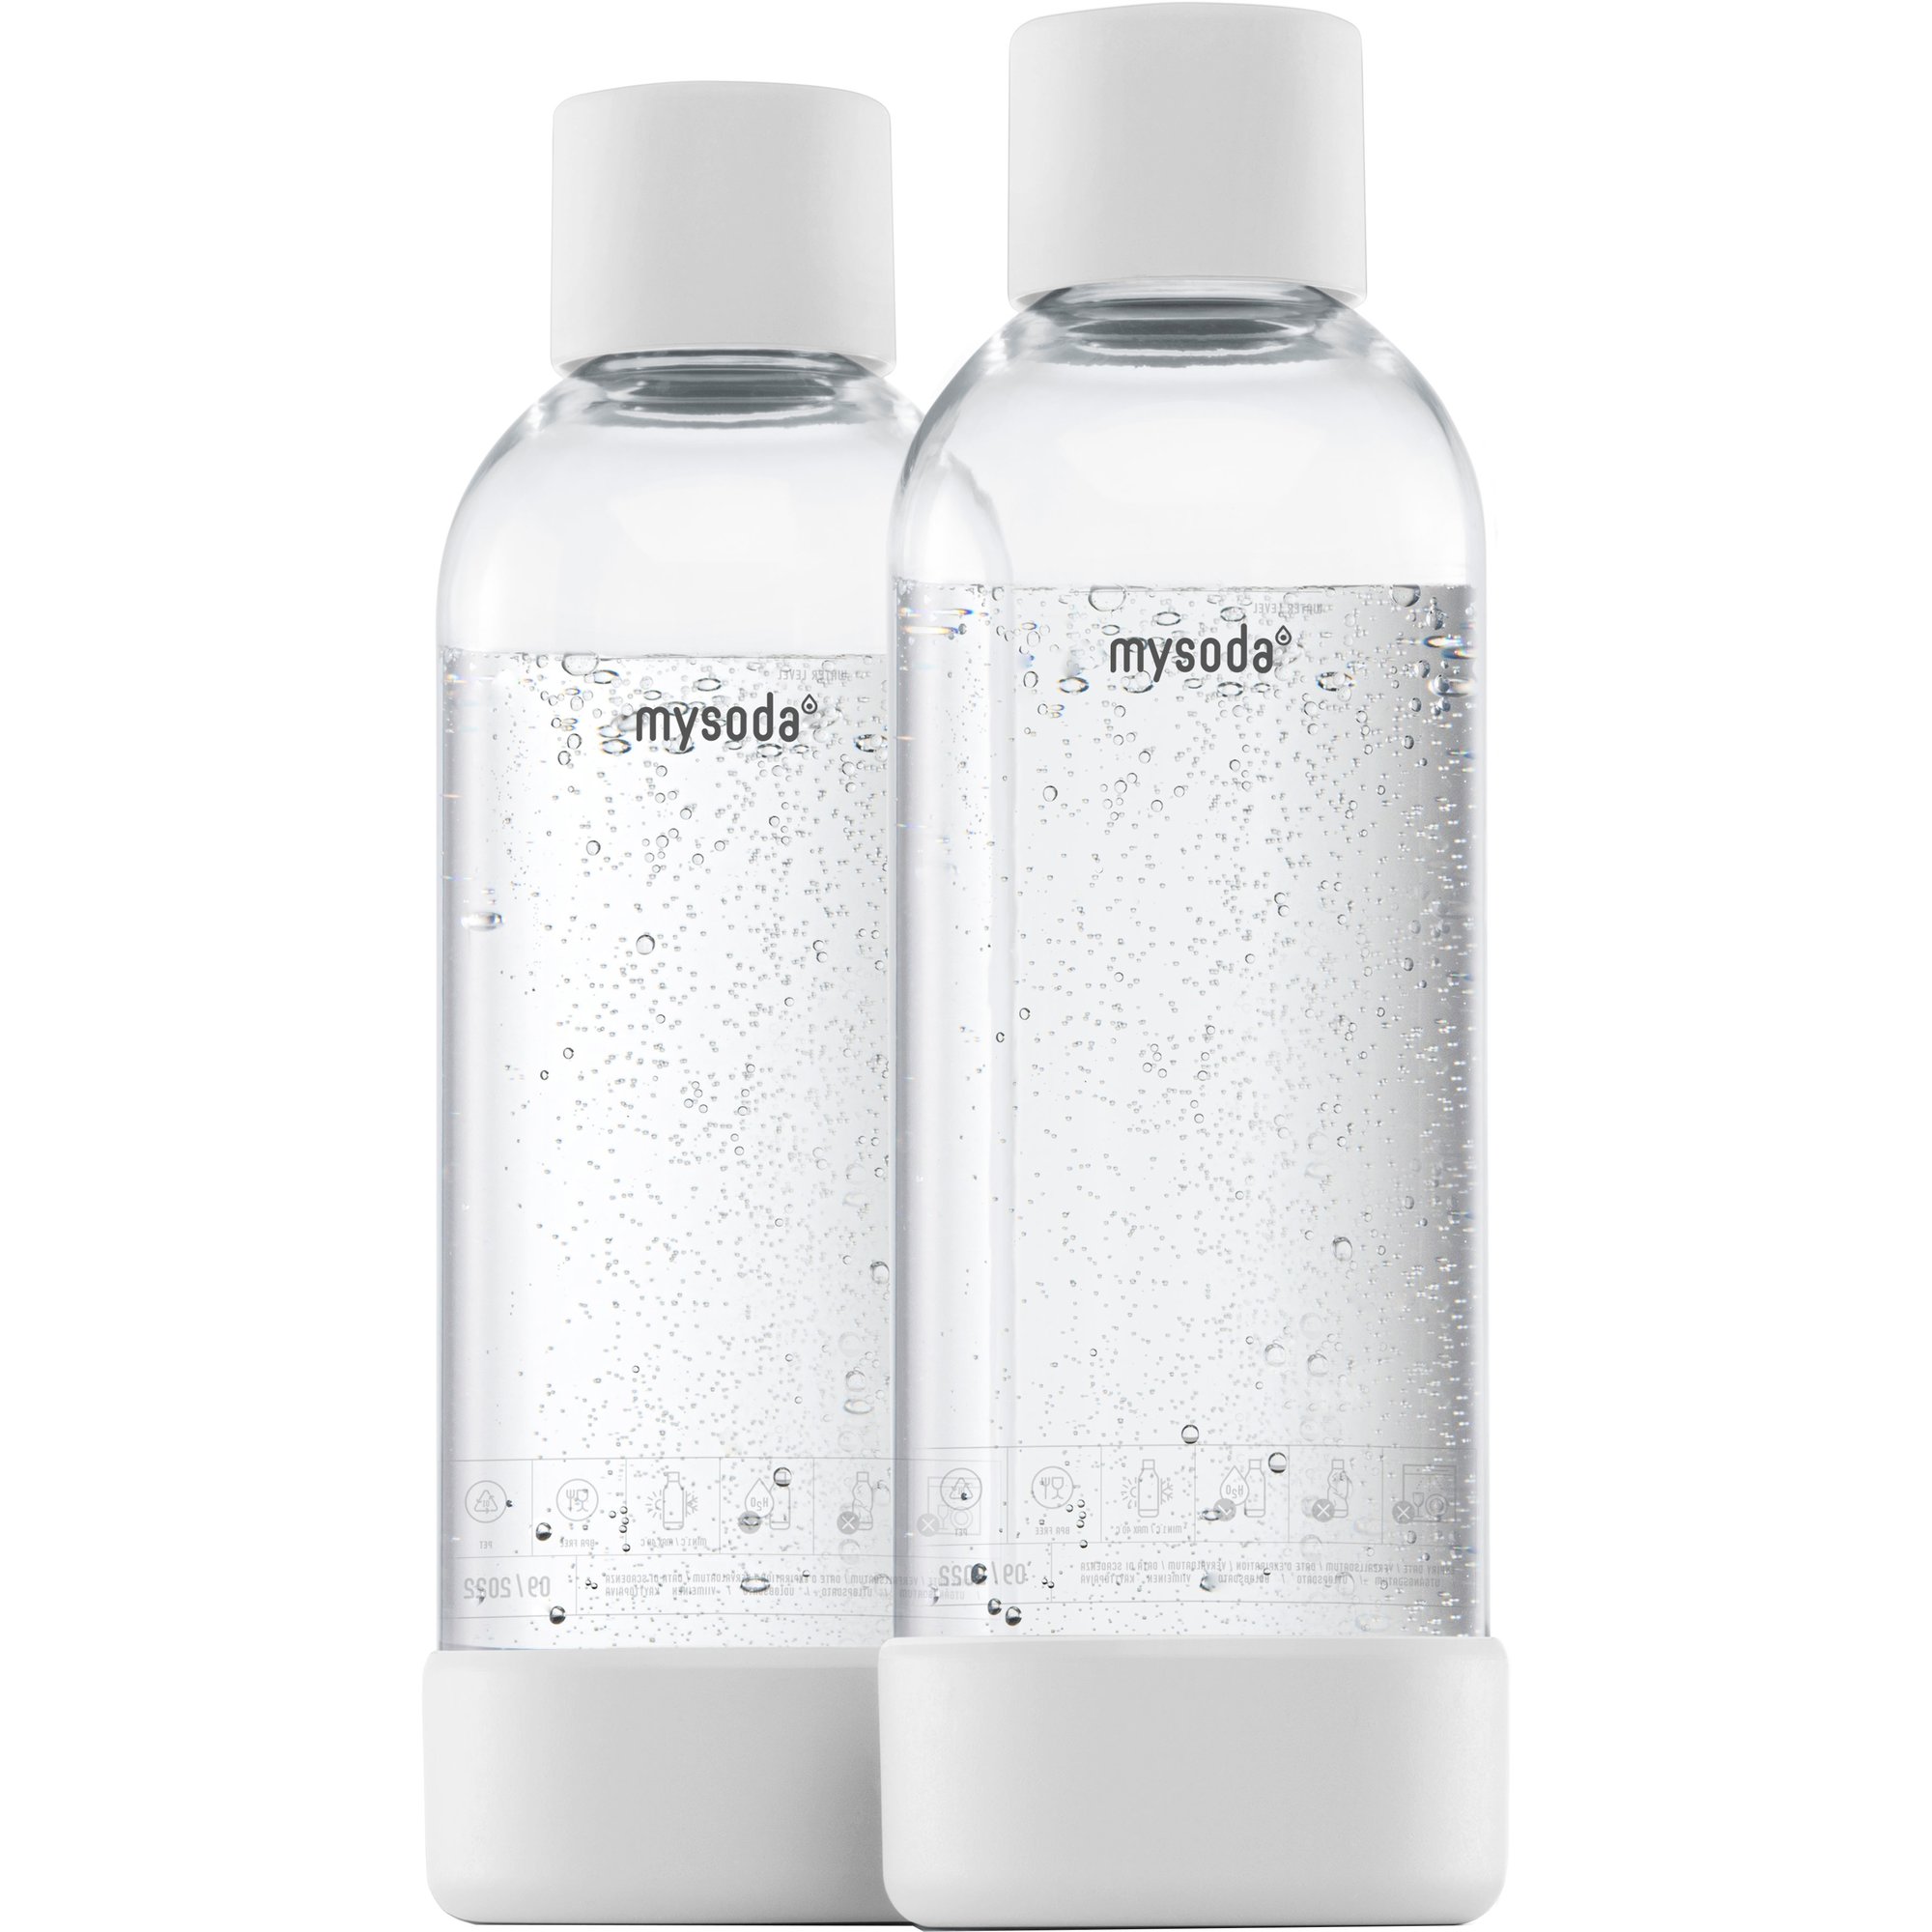 MySoda Vandflaske 1 liter 2 stk. Hvid